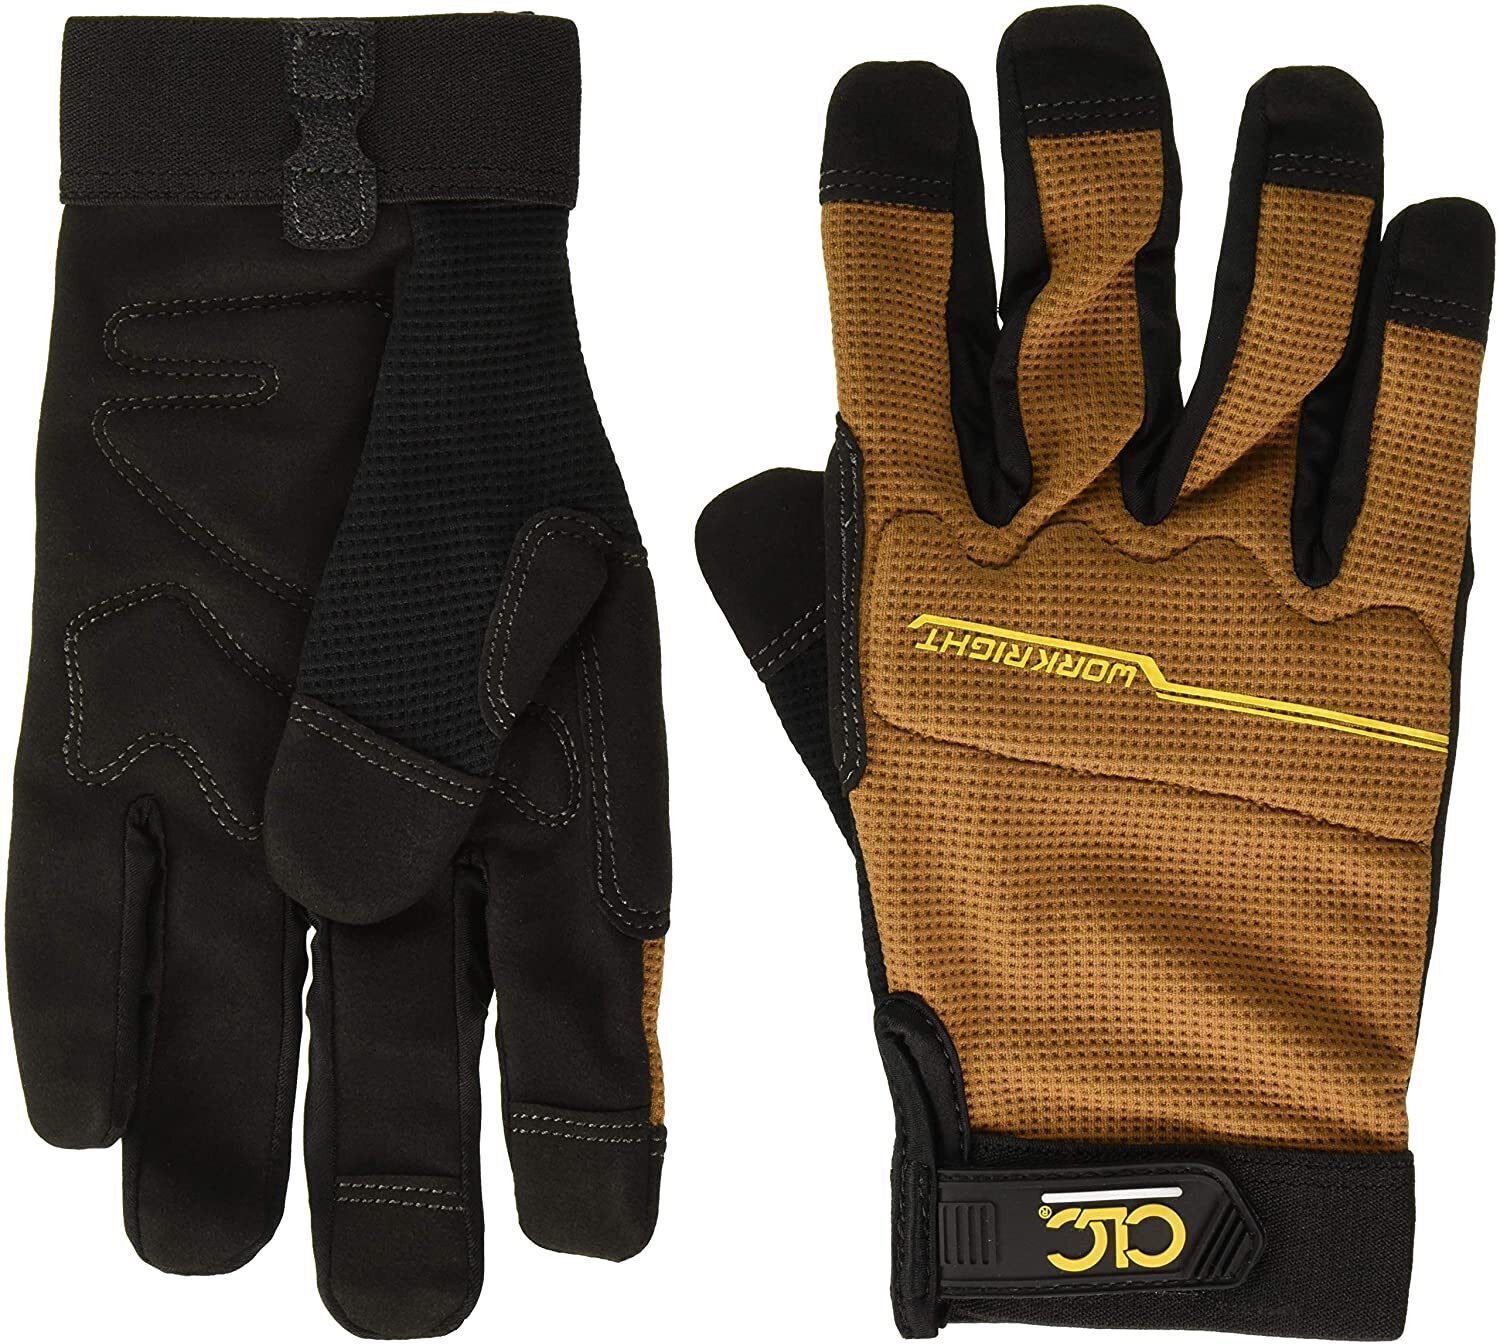 Custom LeatherCraft WorkRight Gloves